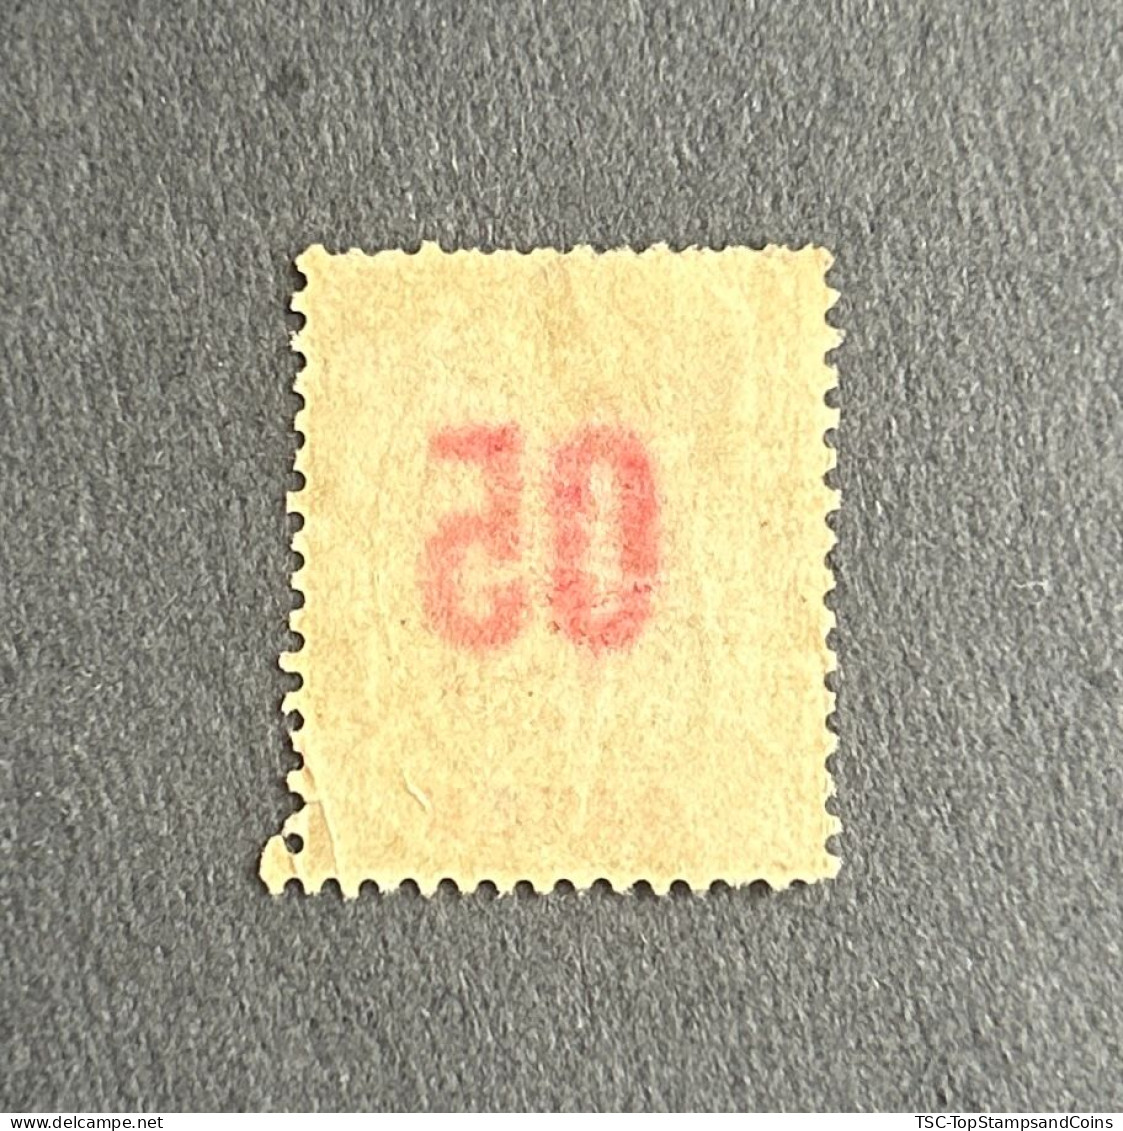 FRAGA0068U2 - Mythology - Surcharged 5 C Over 15 C Used Stamp - Gabon - 1912 - Usados